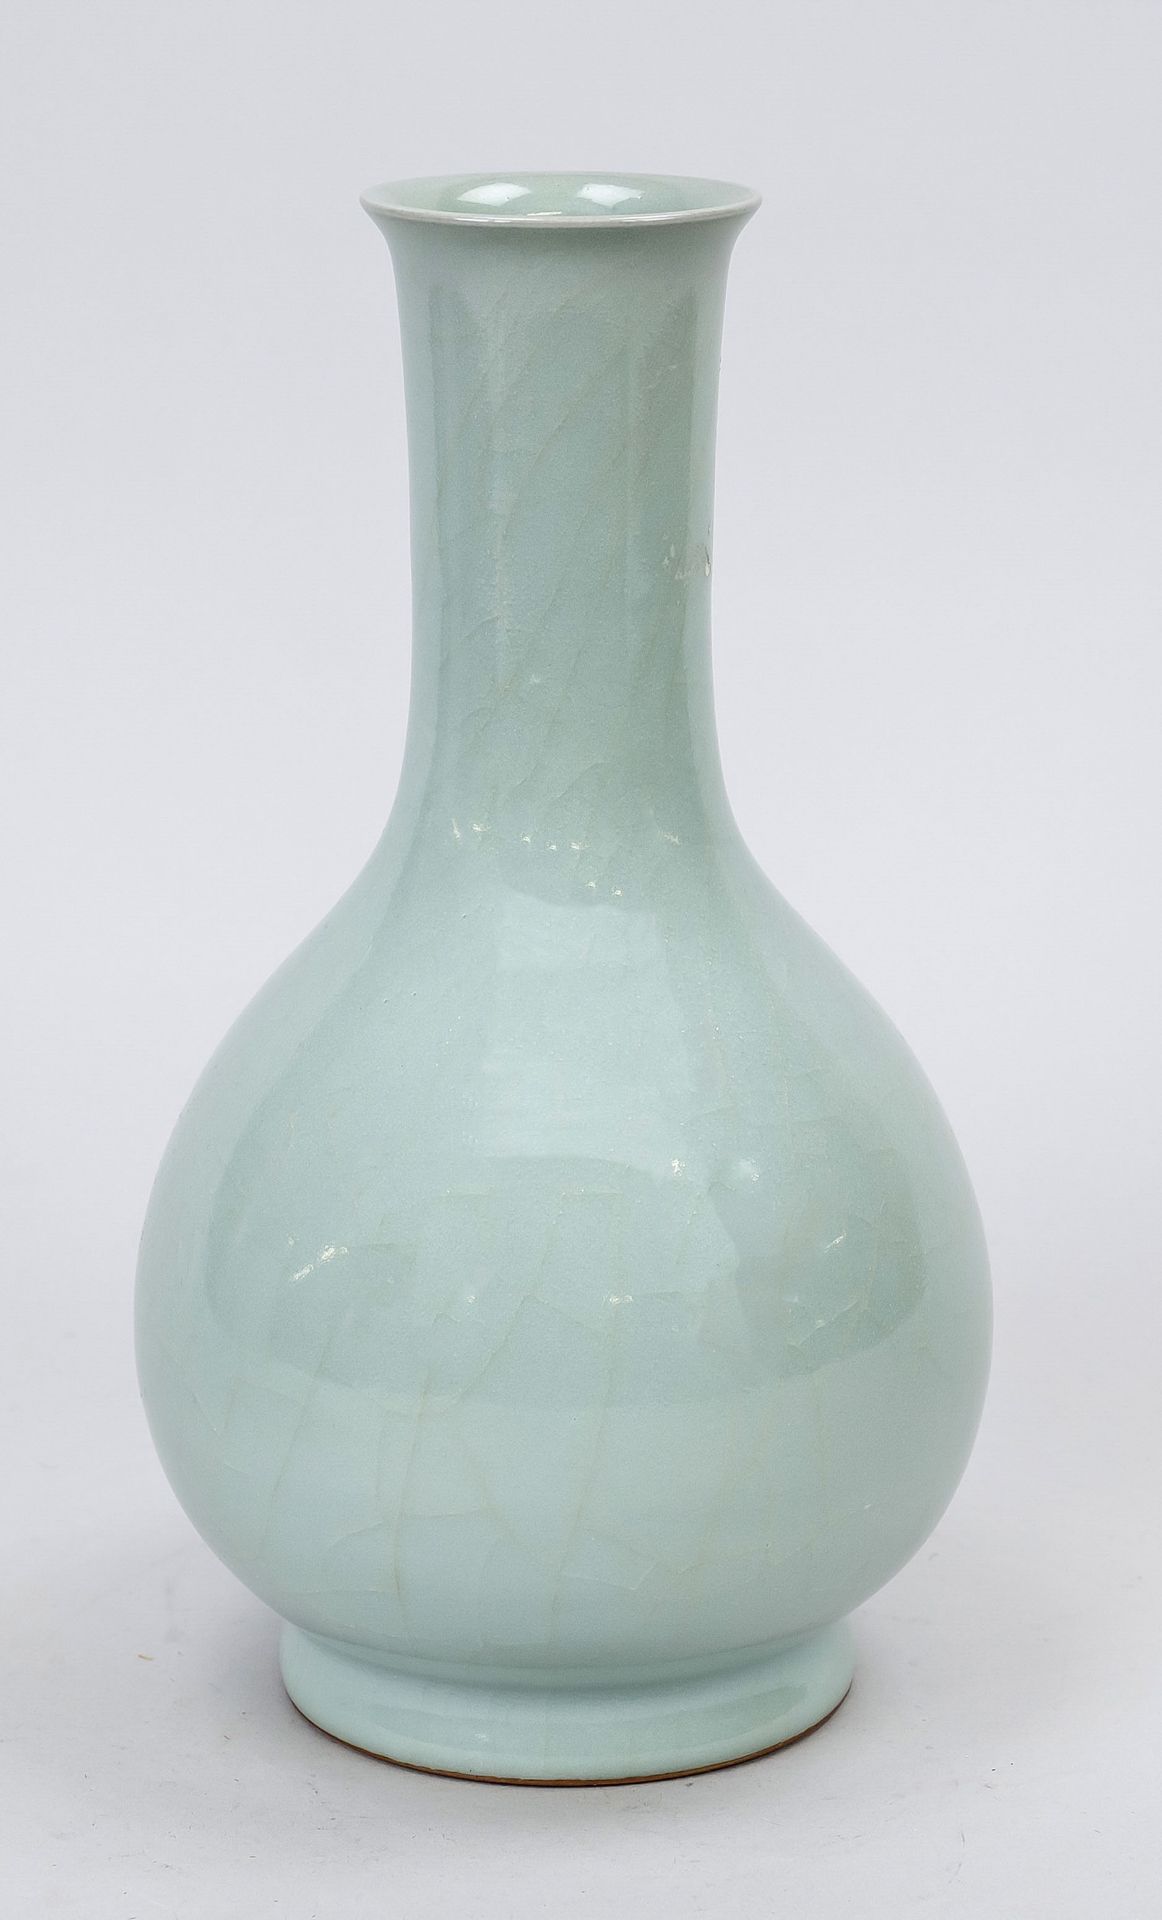 Longquan Selason Vase, China, 19th/20th century Bottle vase with monochrome, celadon-colored glaze